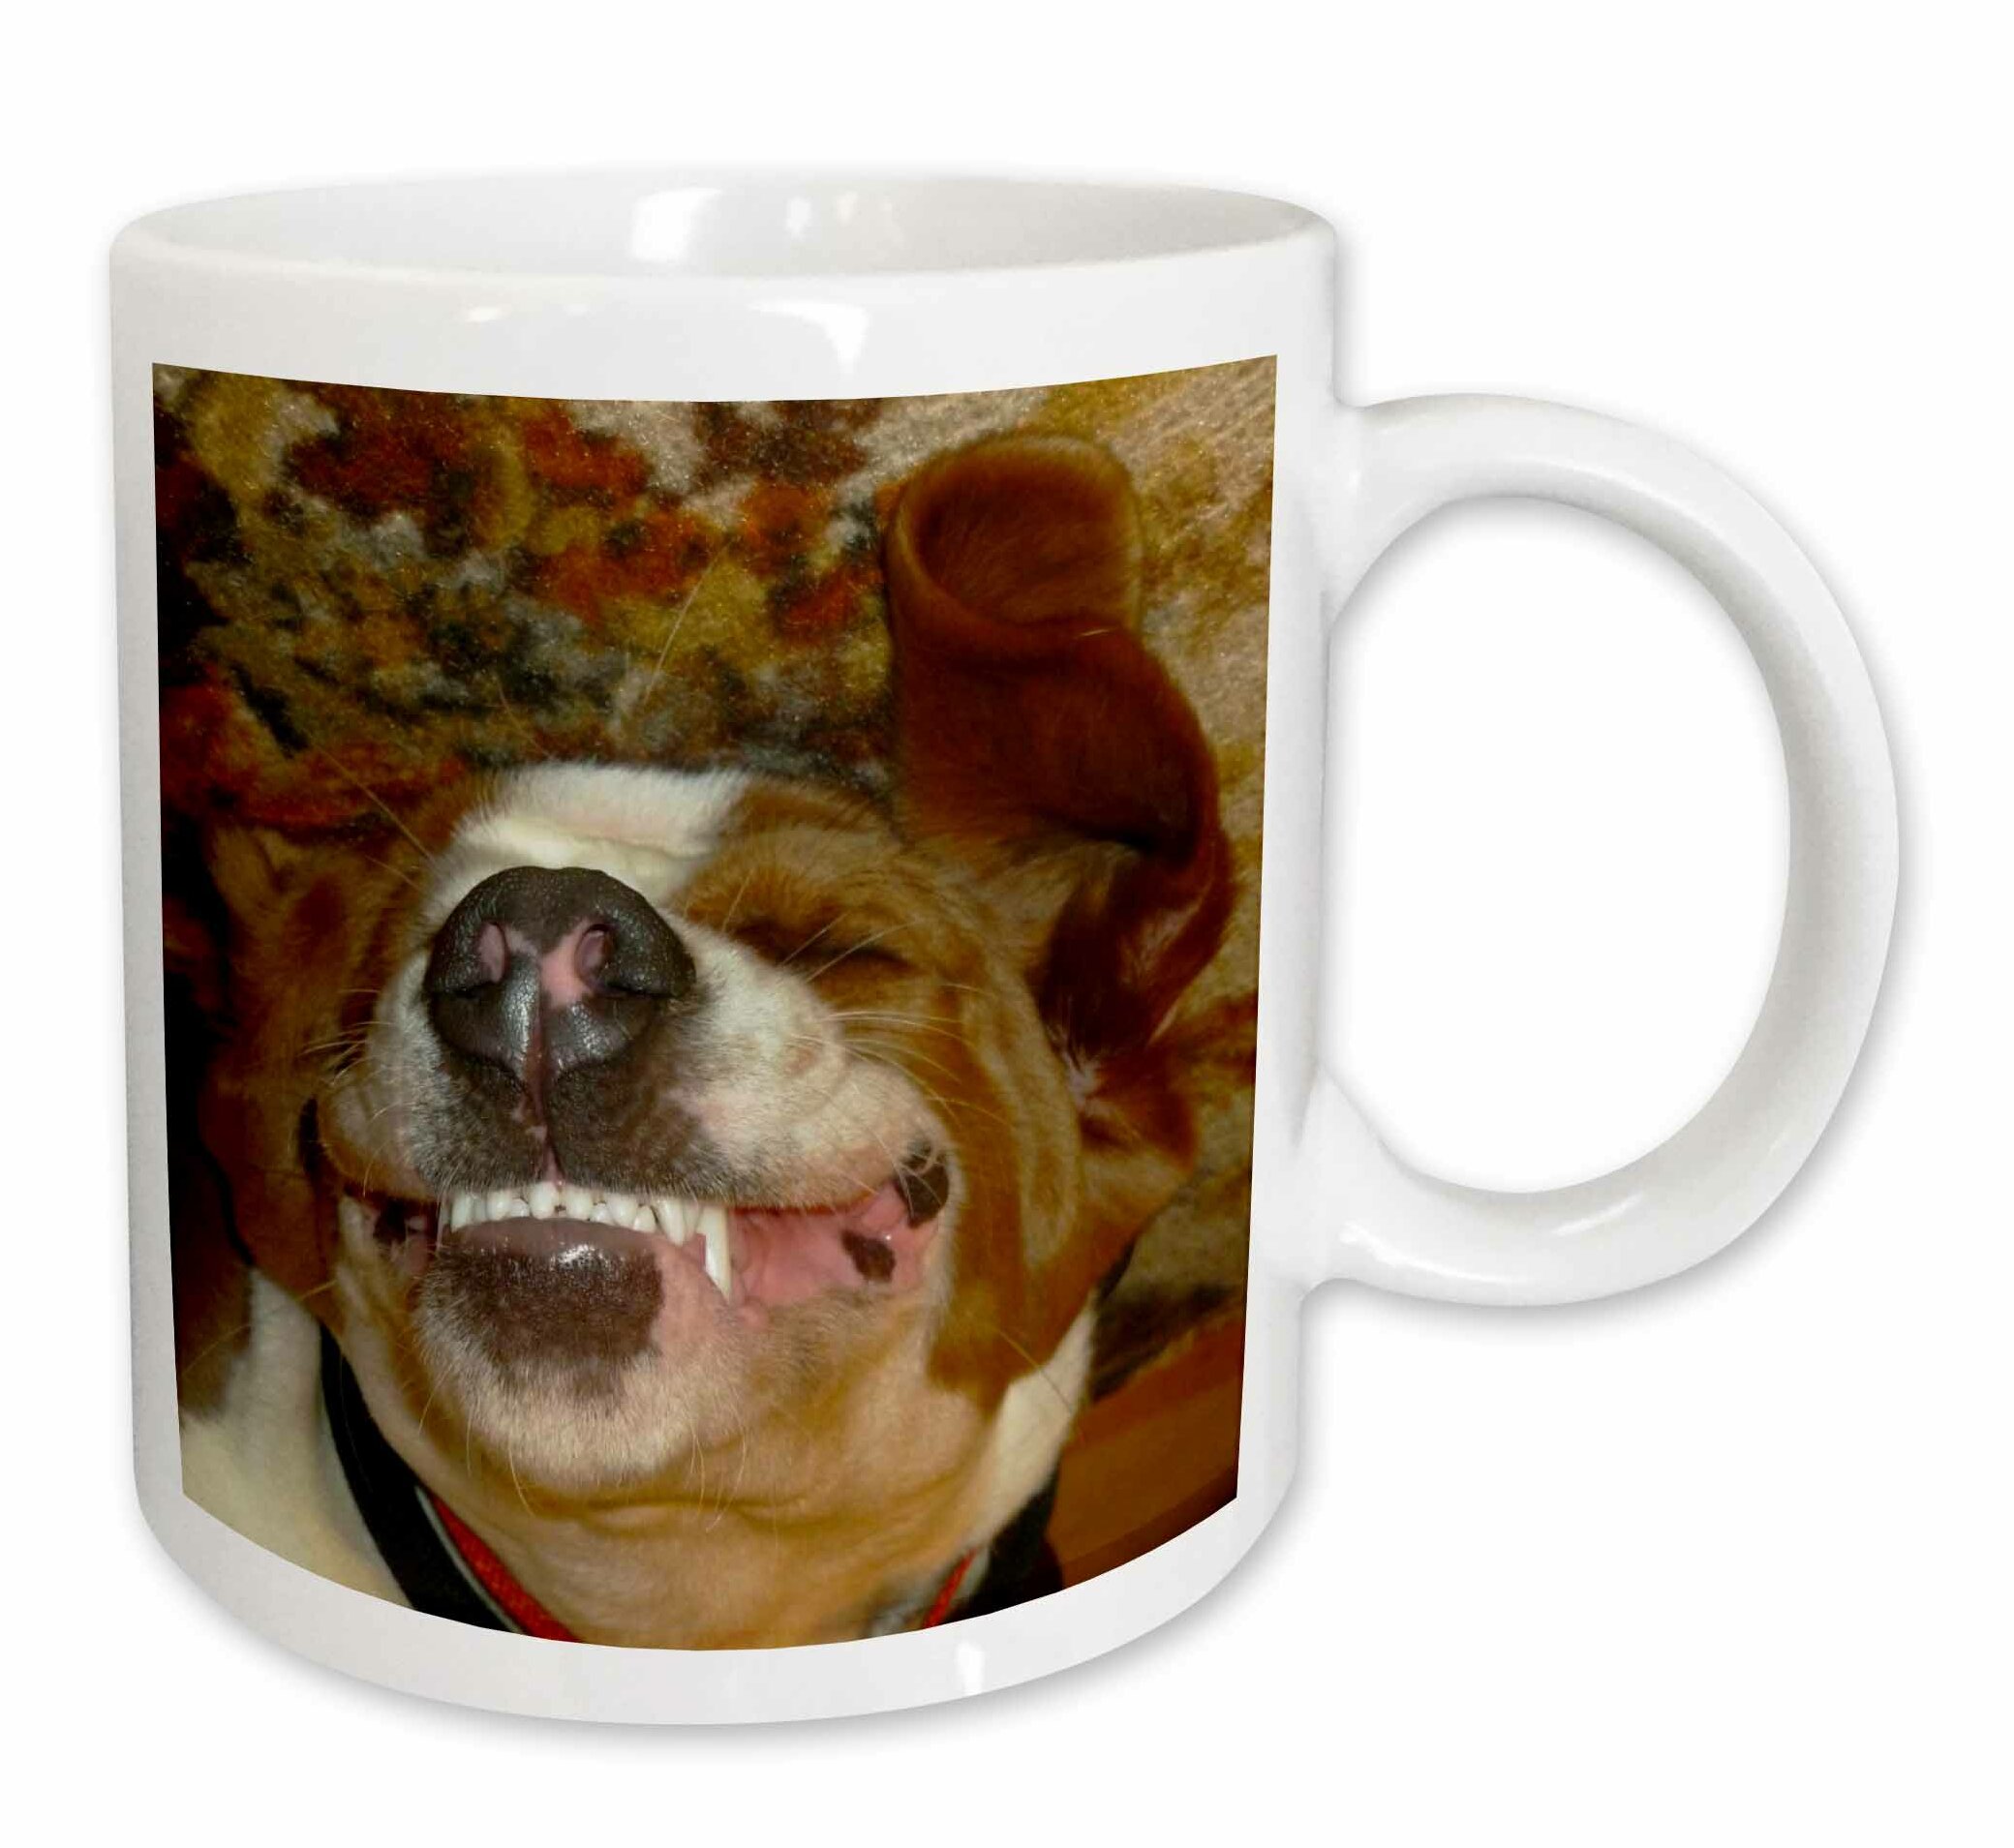 basset hound smiling